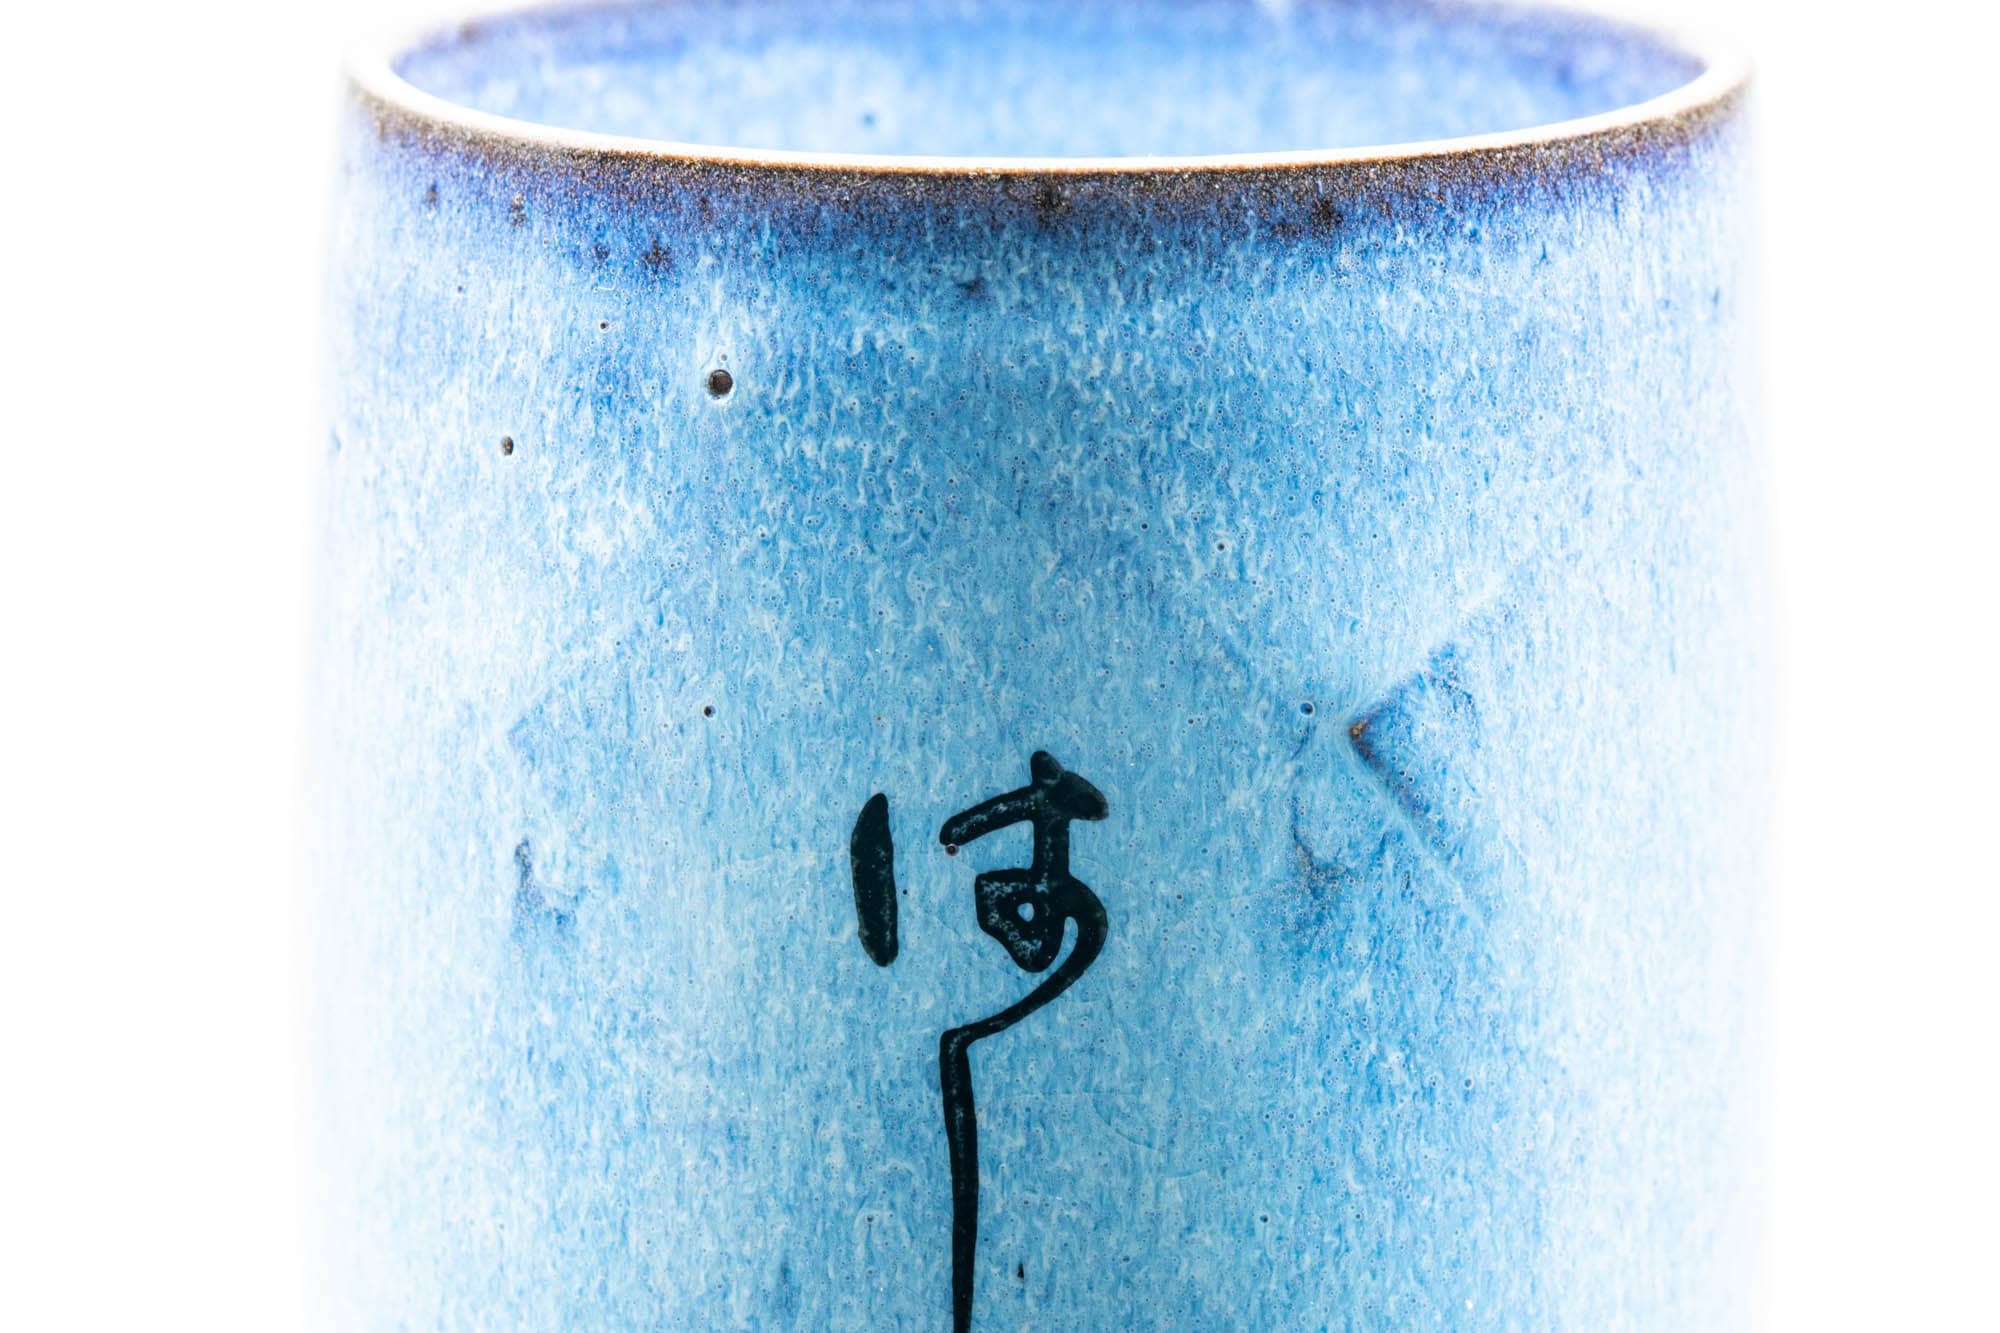 Japanese Teacup - Sky Blue Shino Glazed Glazed Yunomi - 275ml